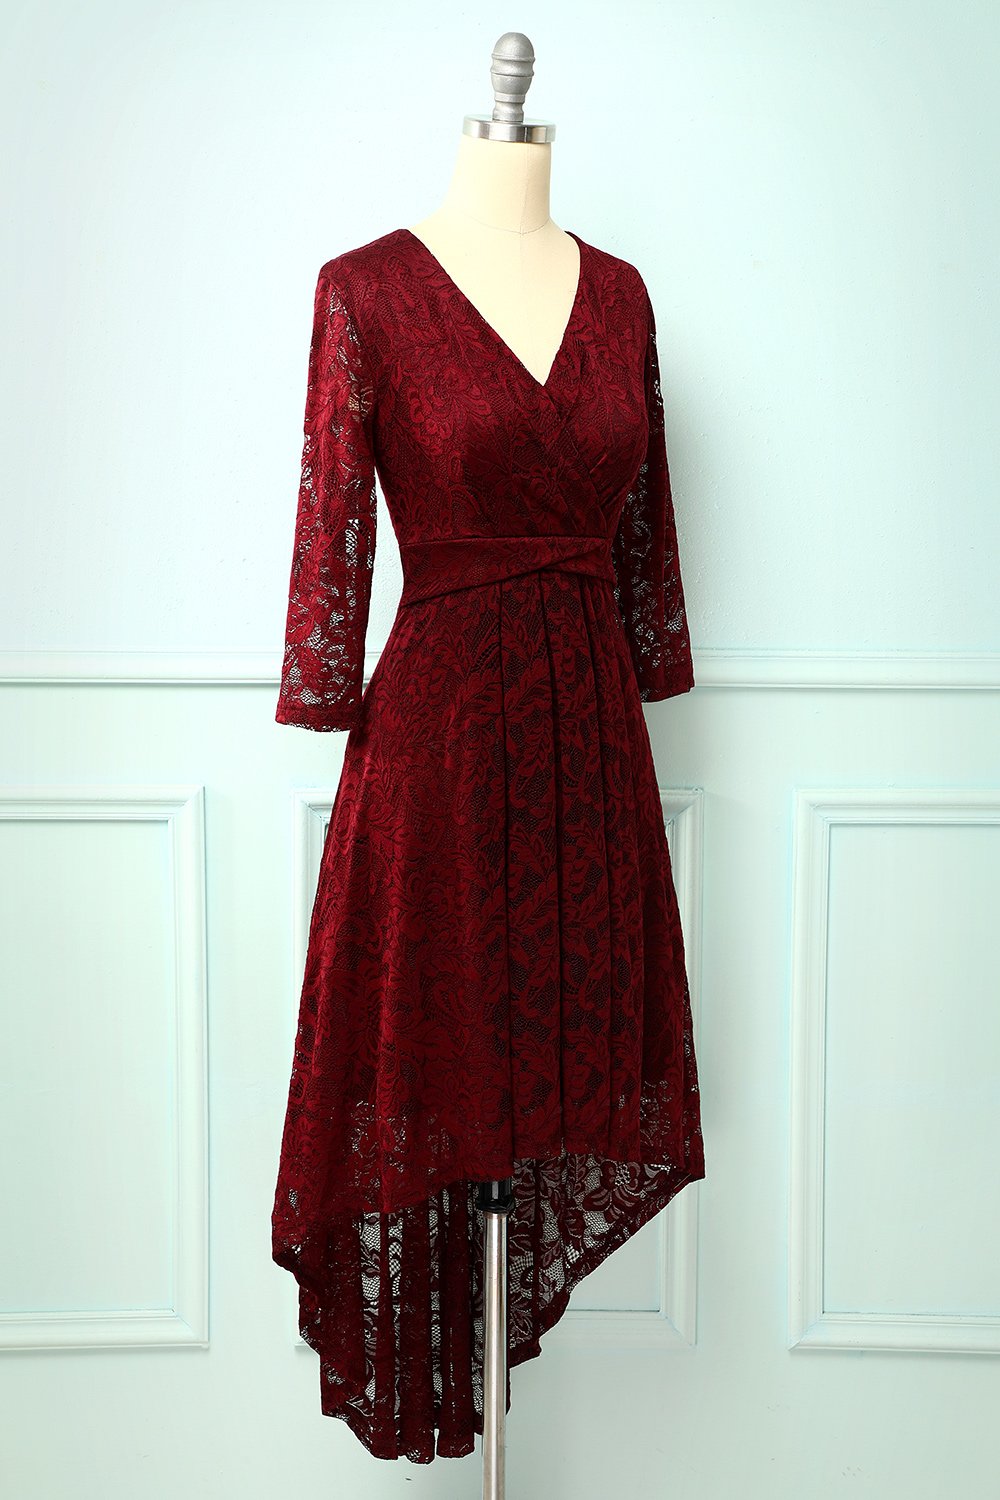 Burgundy V Neck Long Sleeves High Low Formal Lace Dress